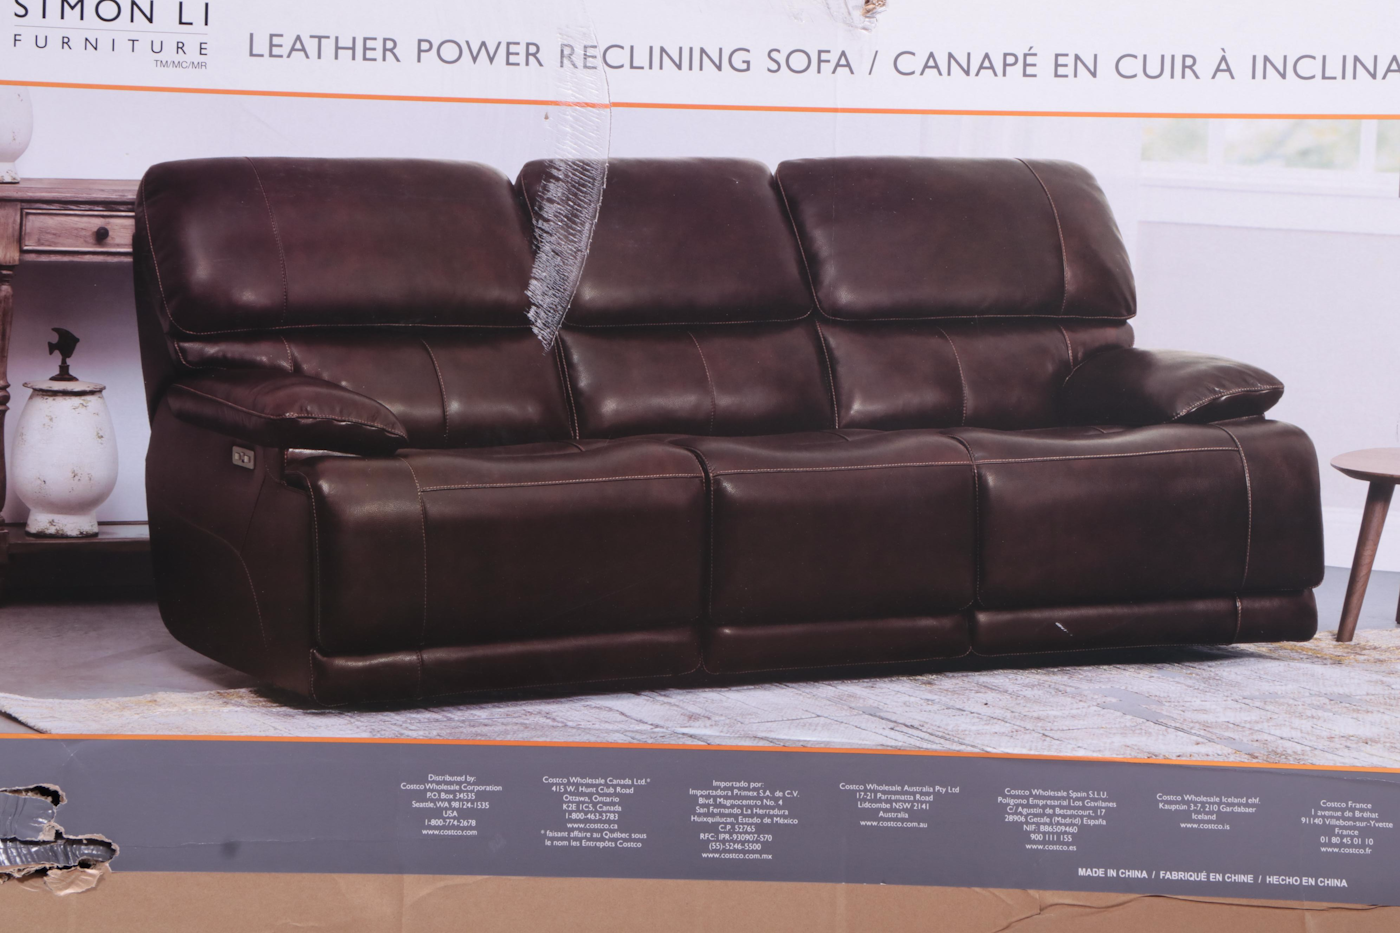 simon li aleena leather power reclining sofa